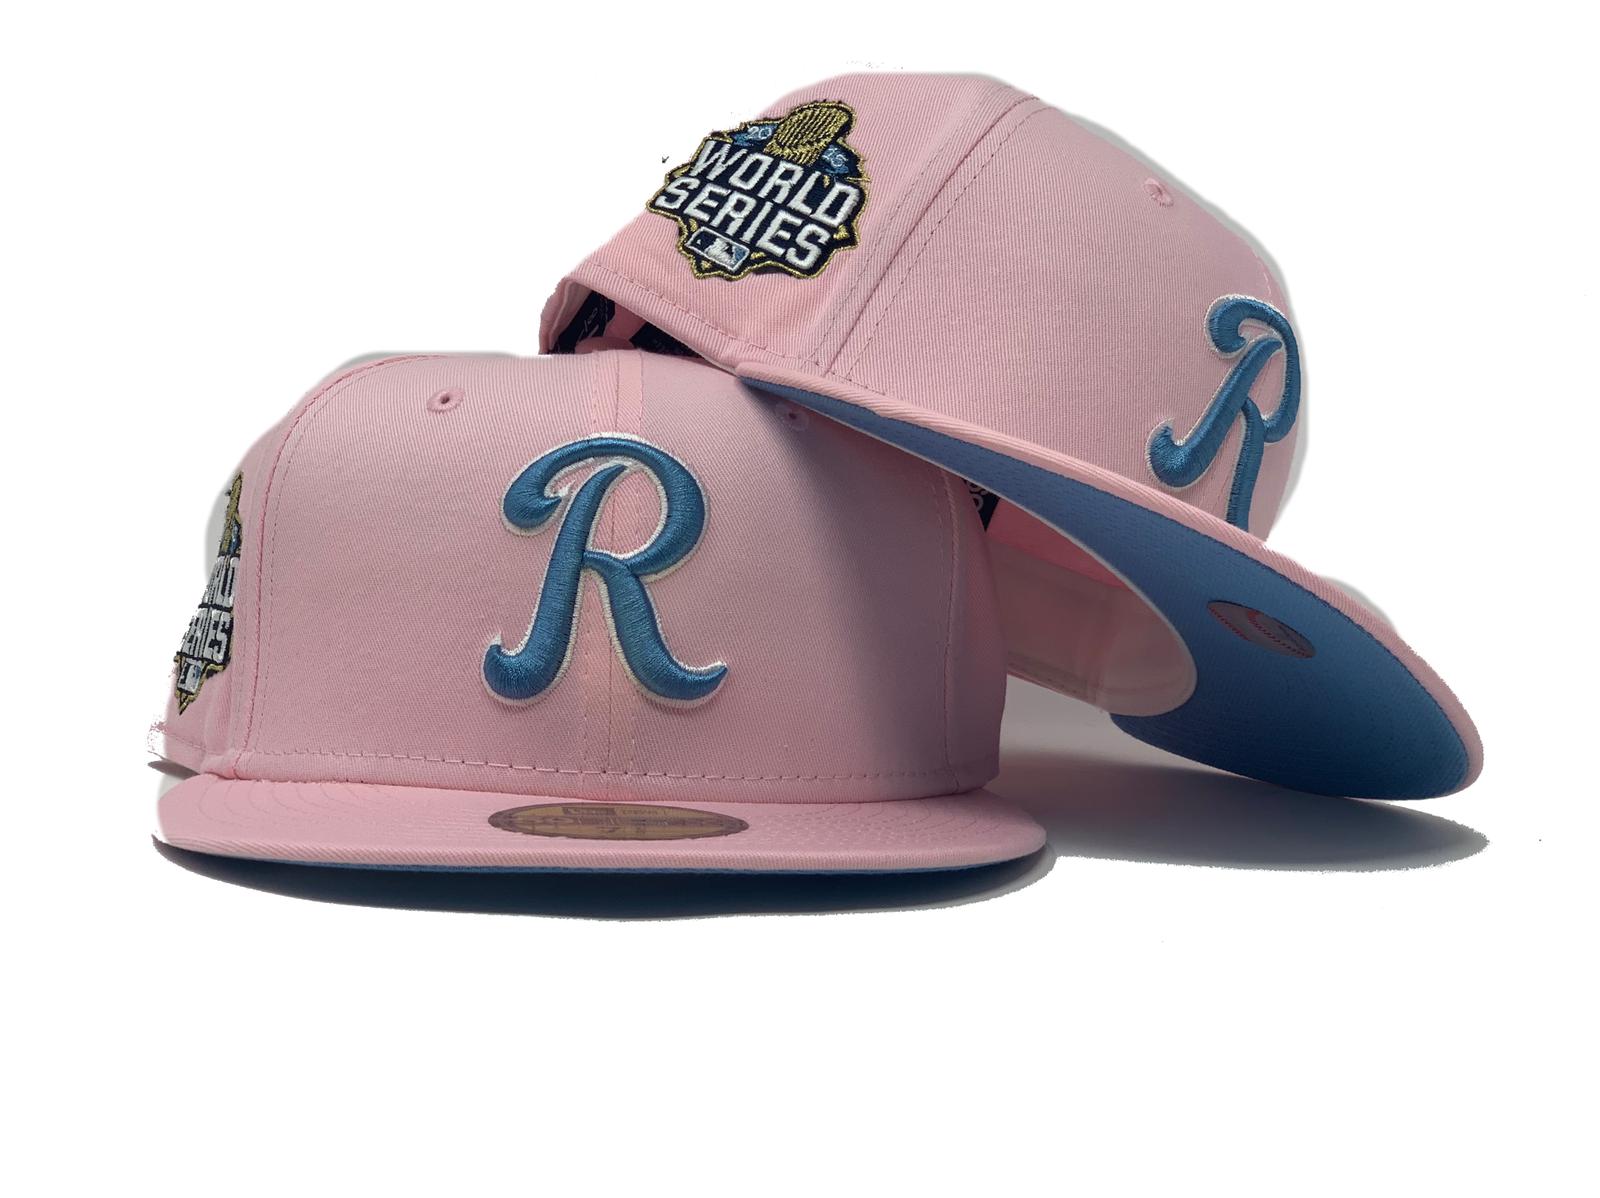 New Era Hat - Kansas City Royals - 2015 World Series 8 1/4 / Cream / Royal